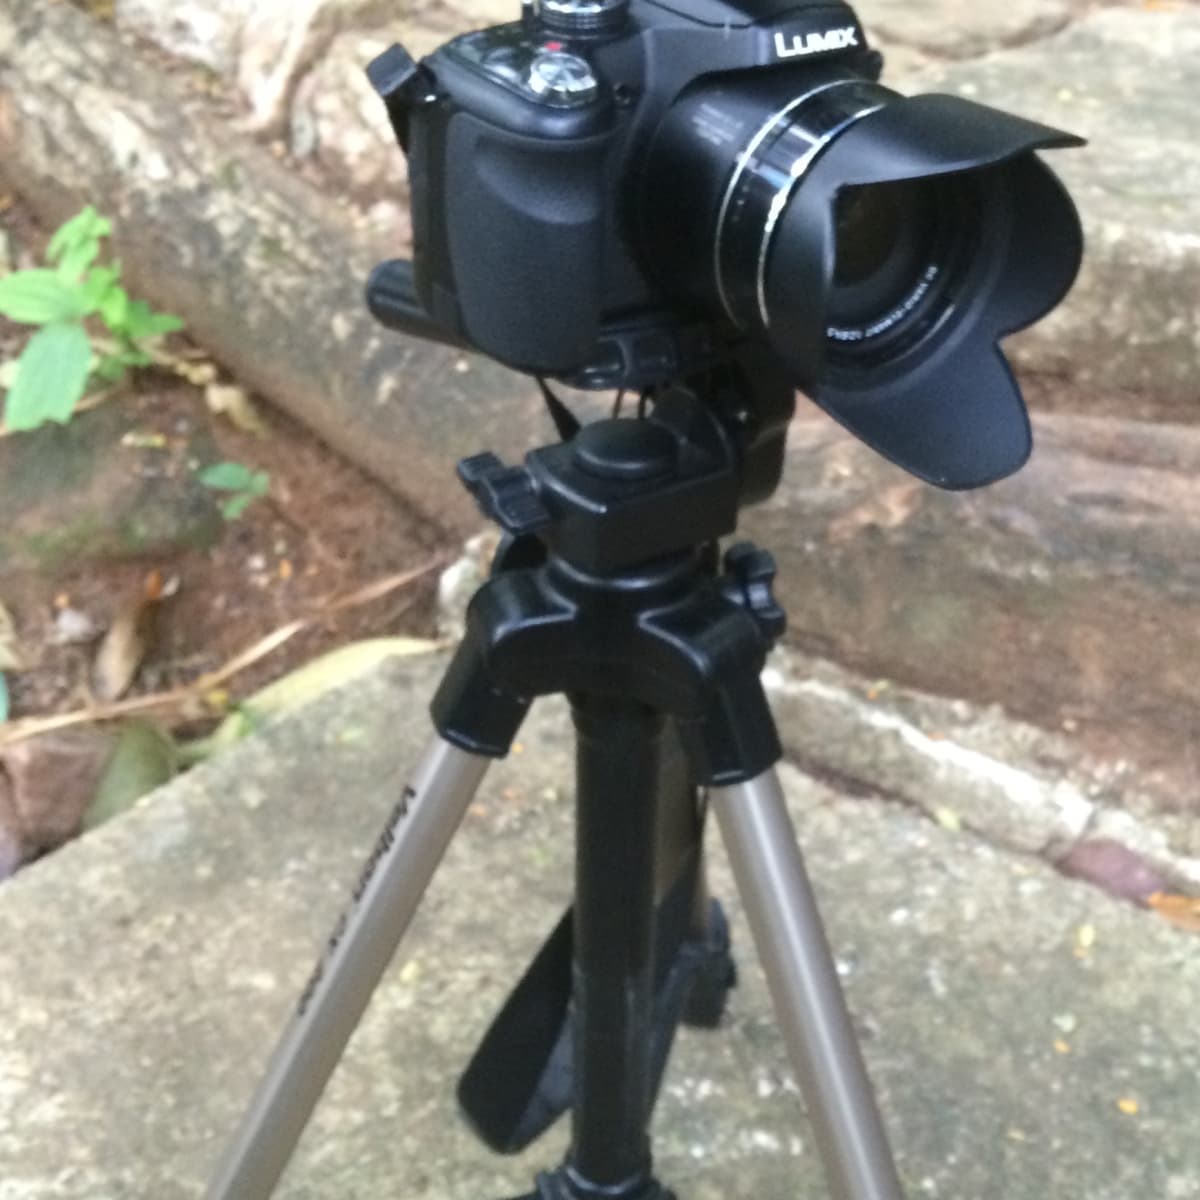 The Panasonic Fz300 - the Most Versatile Bridge Camera Ever? - HubPages